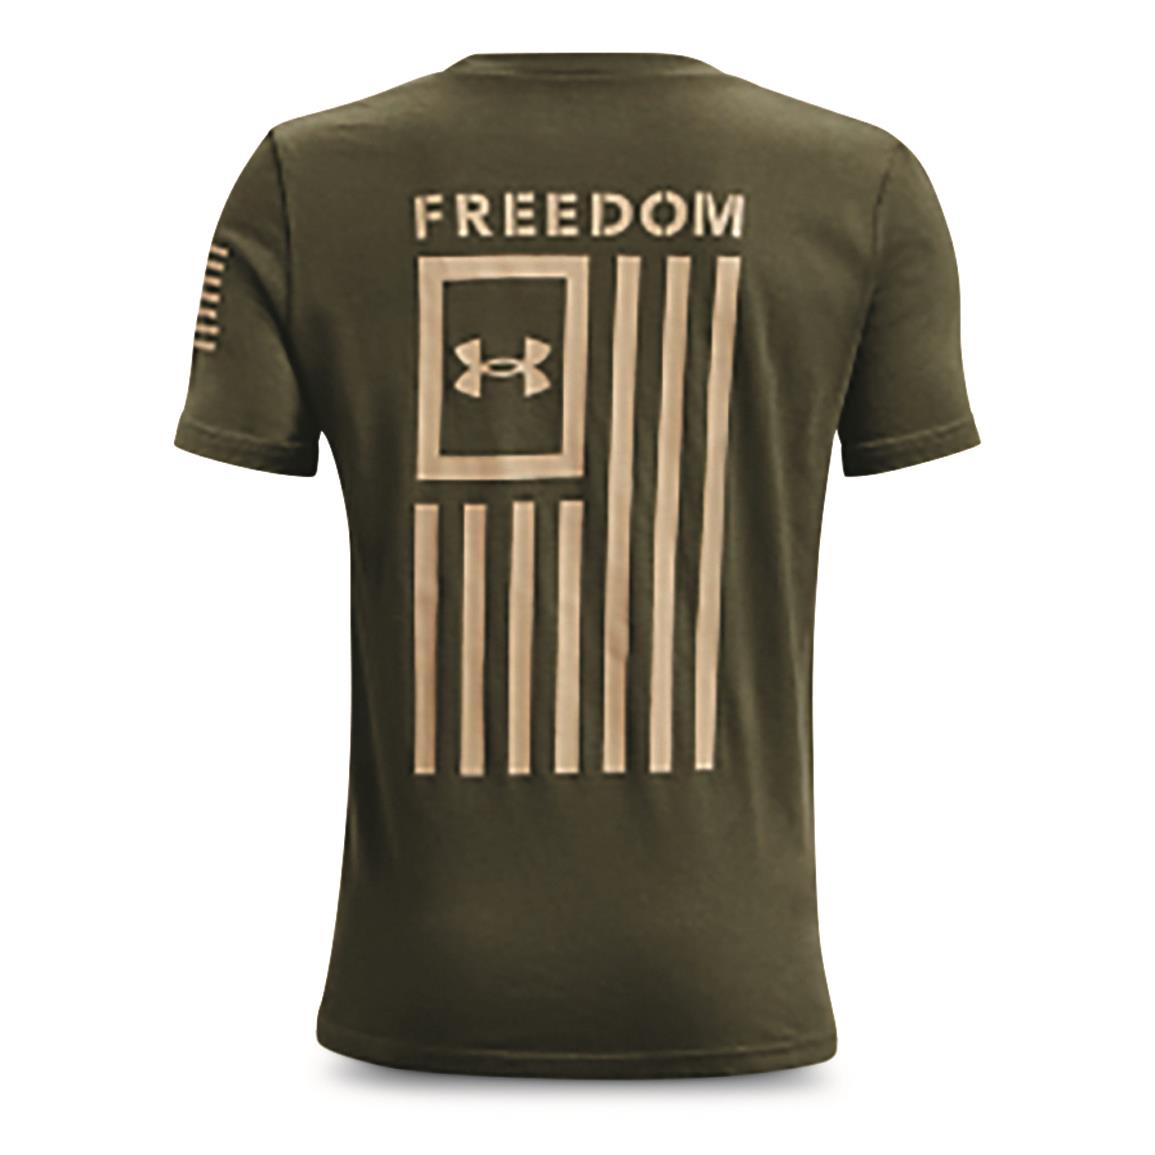 Under Armour Boys' Freedom Flag Shirt, Marine OD Green/Desert Sand